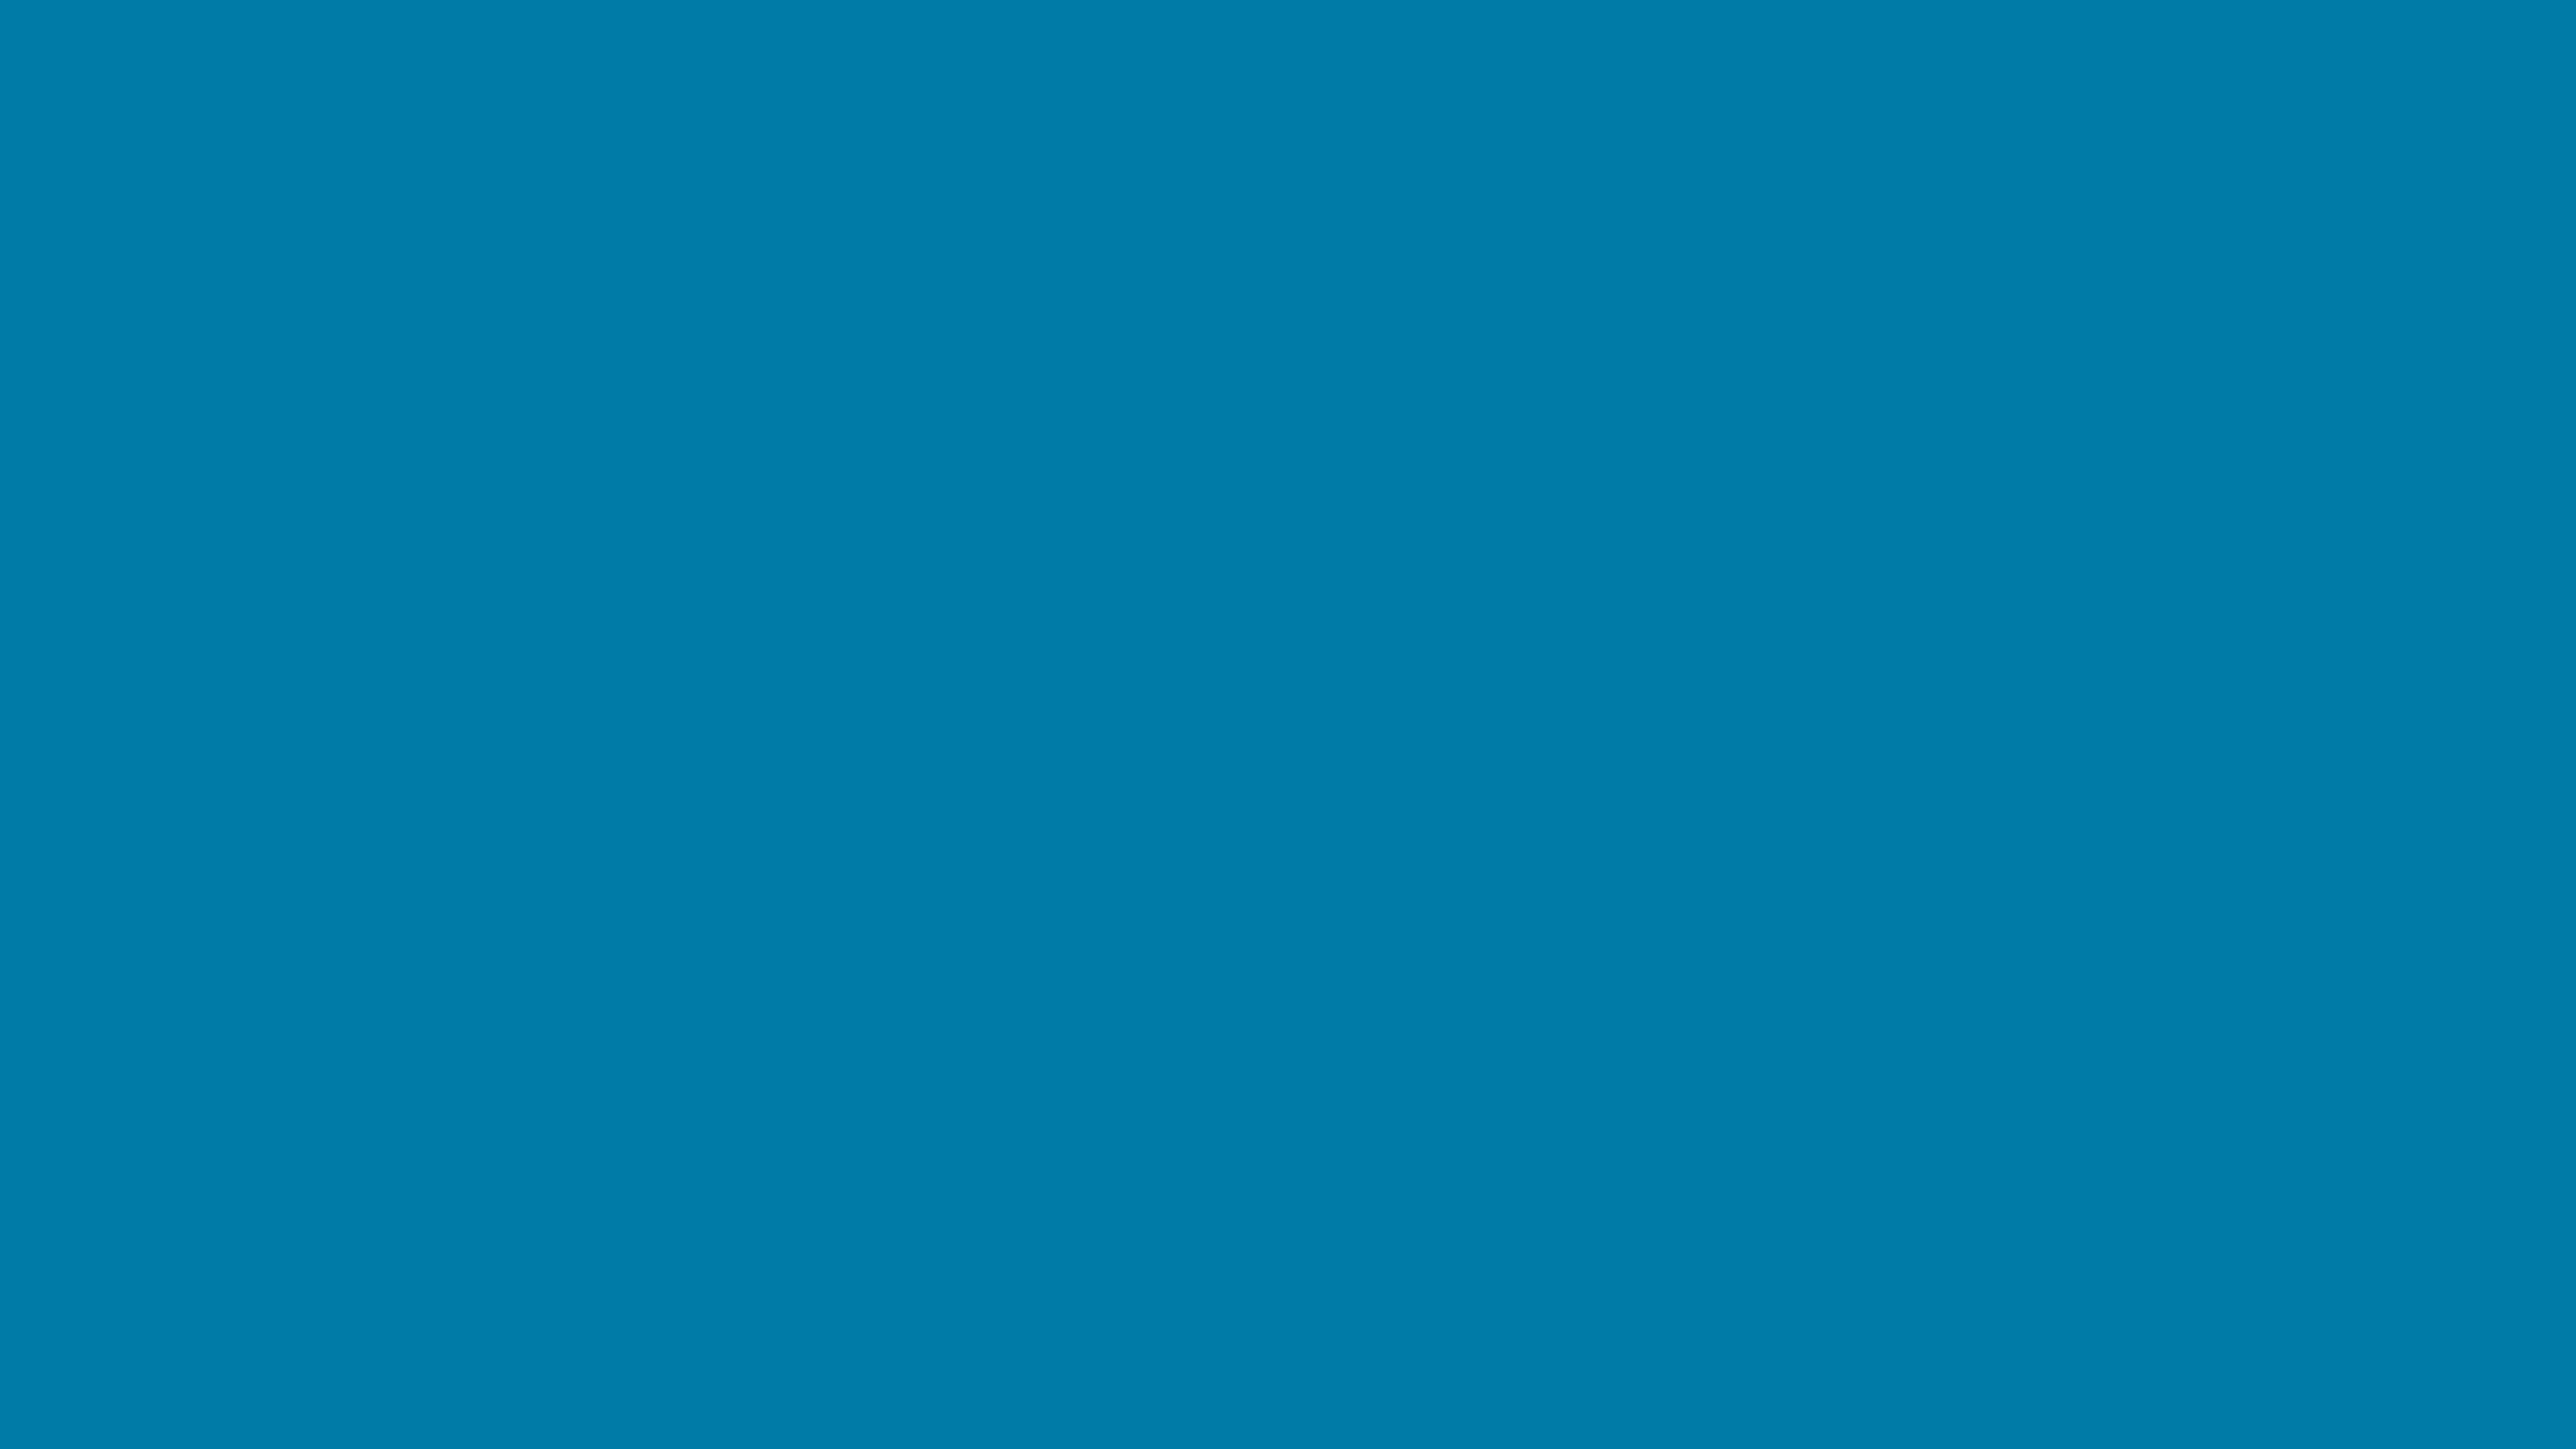 7680x4320 Celadon Blue Solid Color Background